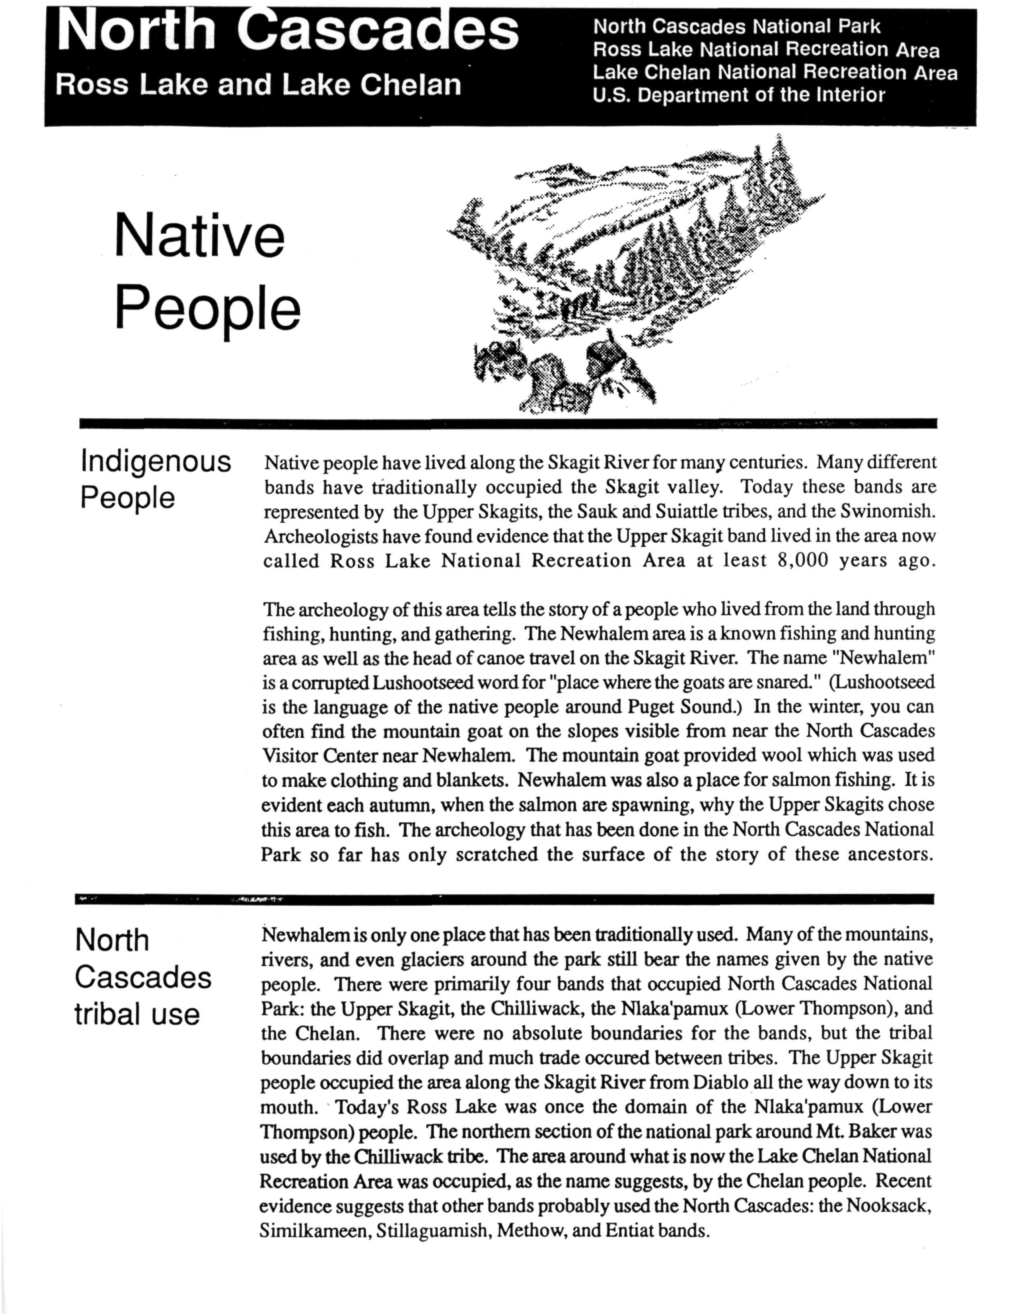 Native People